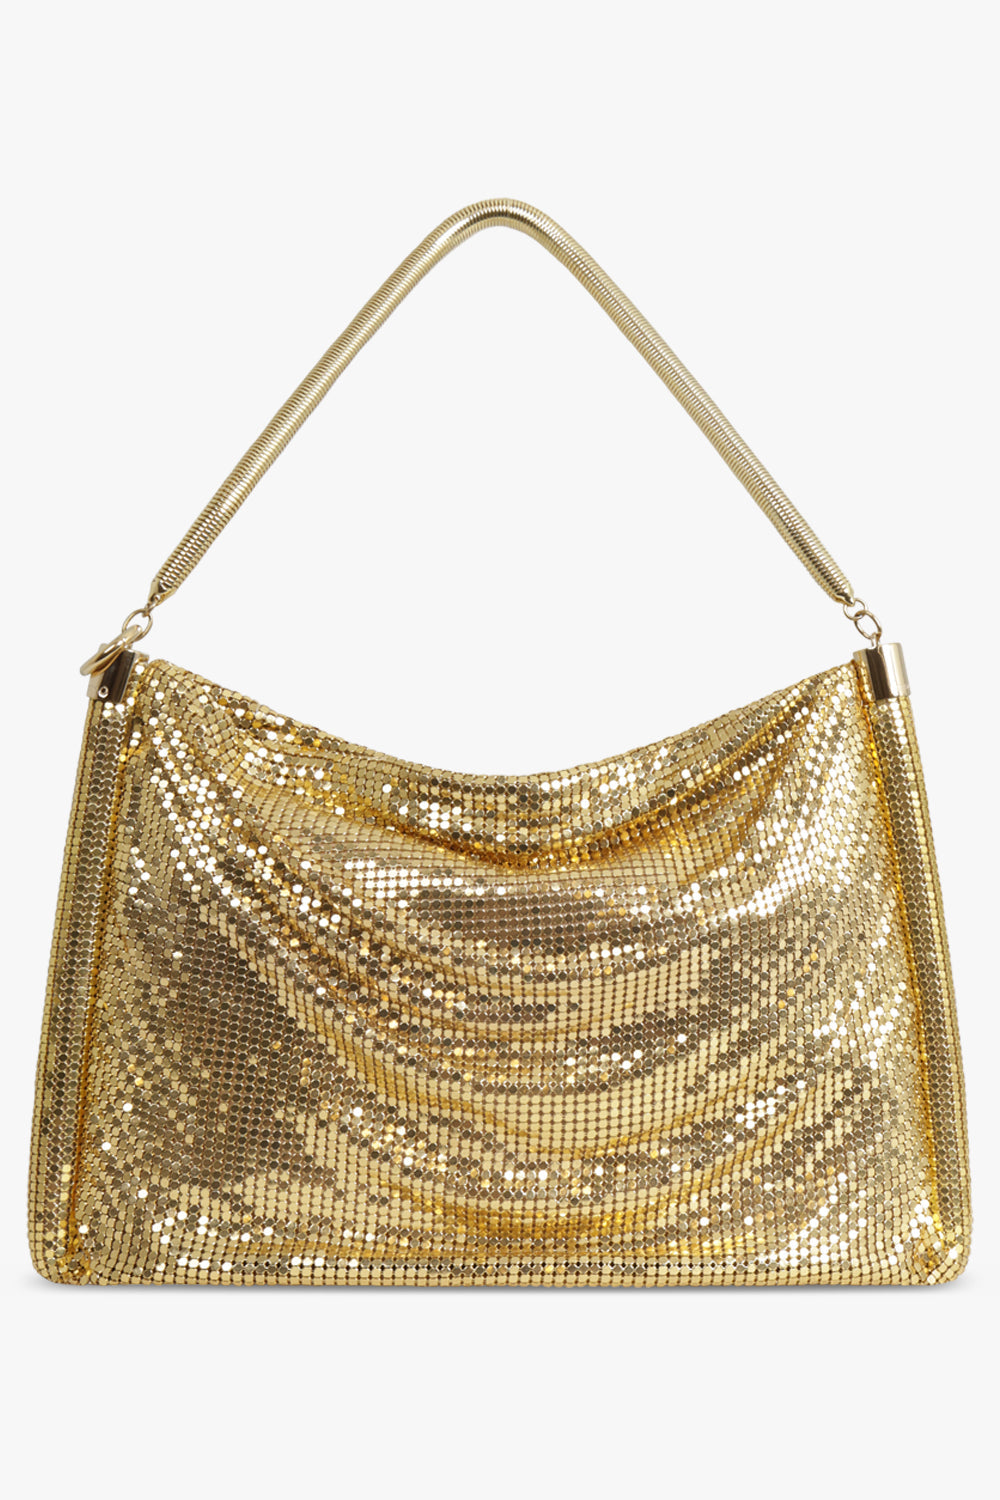 Icing Black satin bow evening purse small dressy purse shoulder bag clutch  NEW | eBay